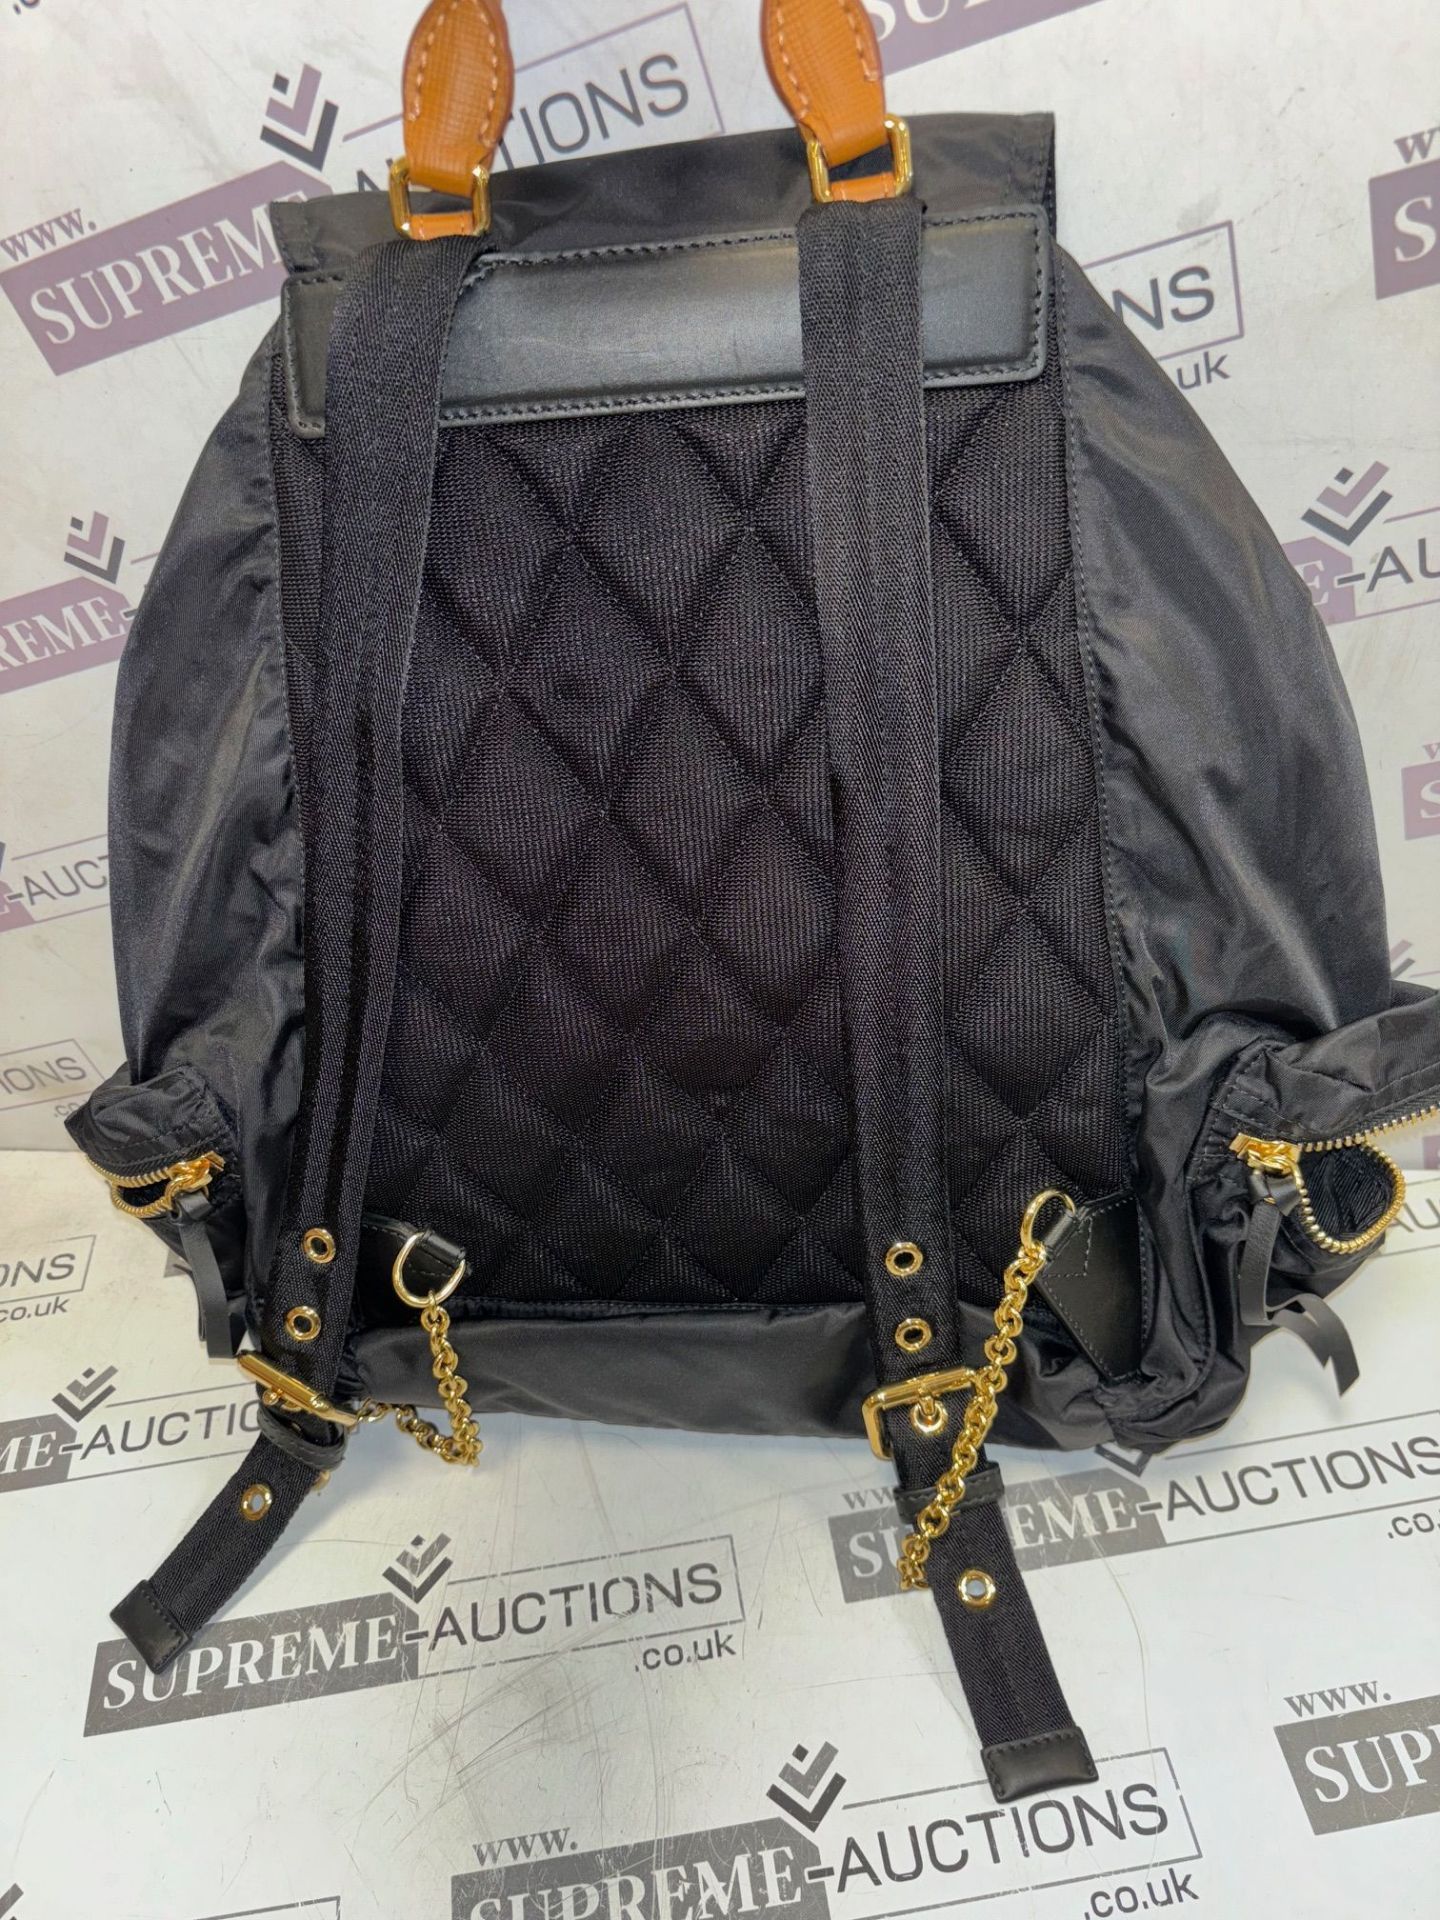 Genuine Burberry Nylon Medium Rucksack Backpack Black, personalised SBDC. Used for training. 21/28 - Image 4 of 6